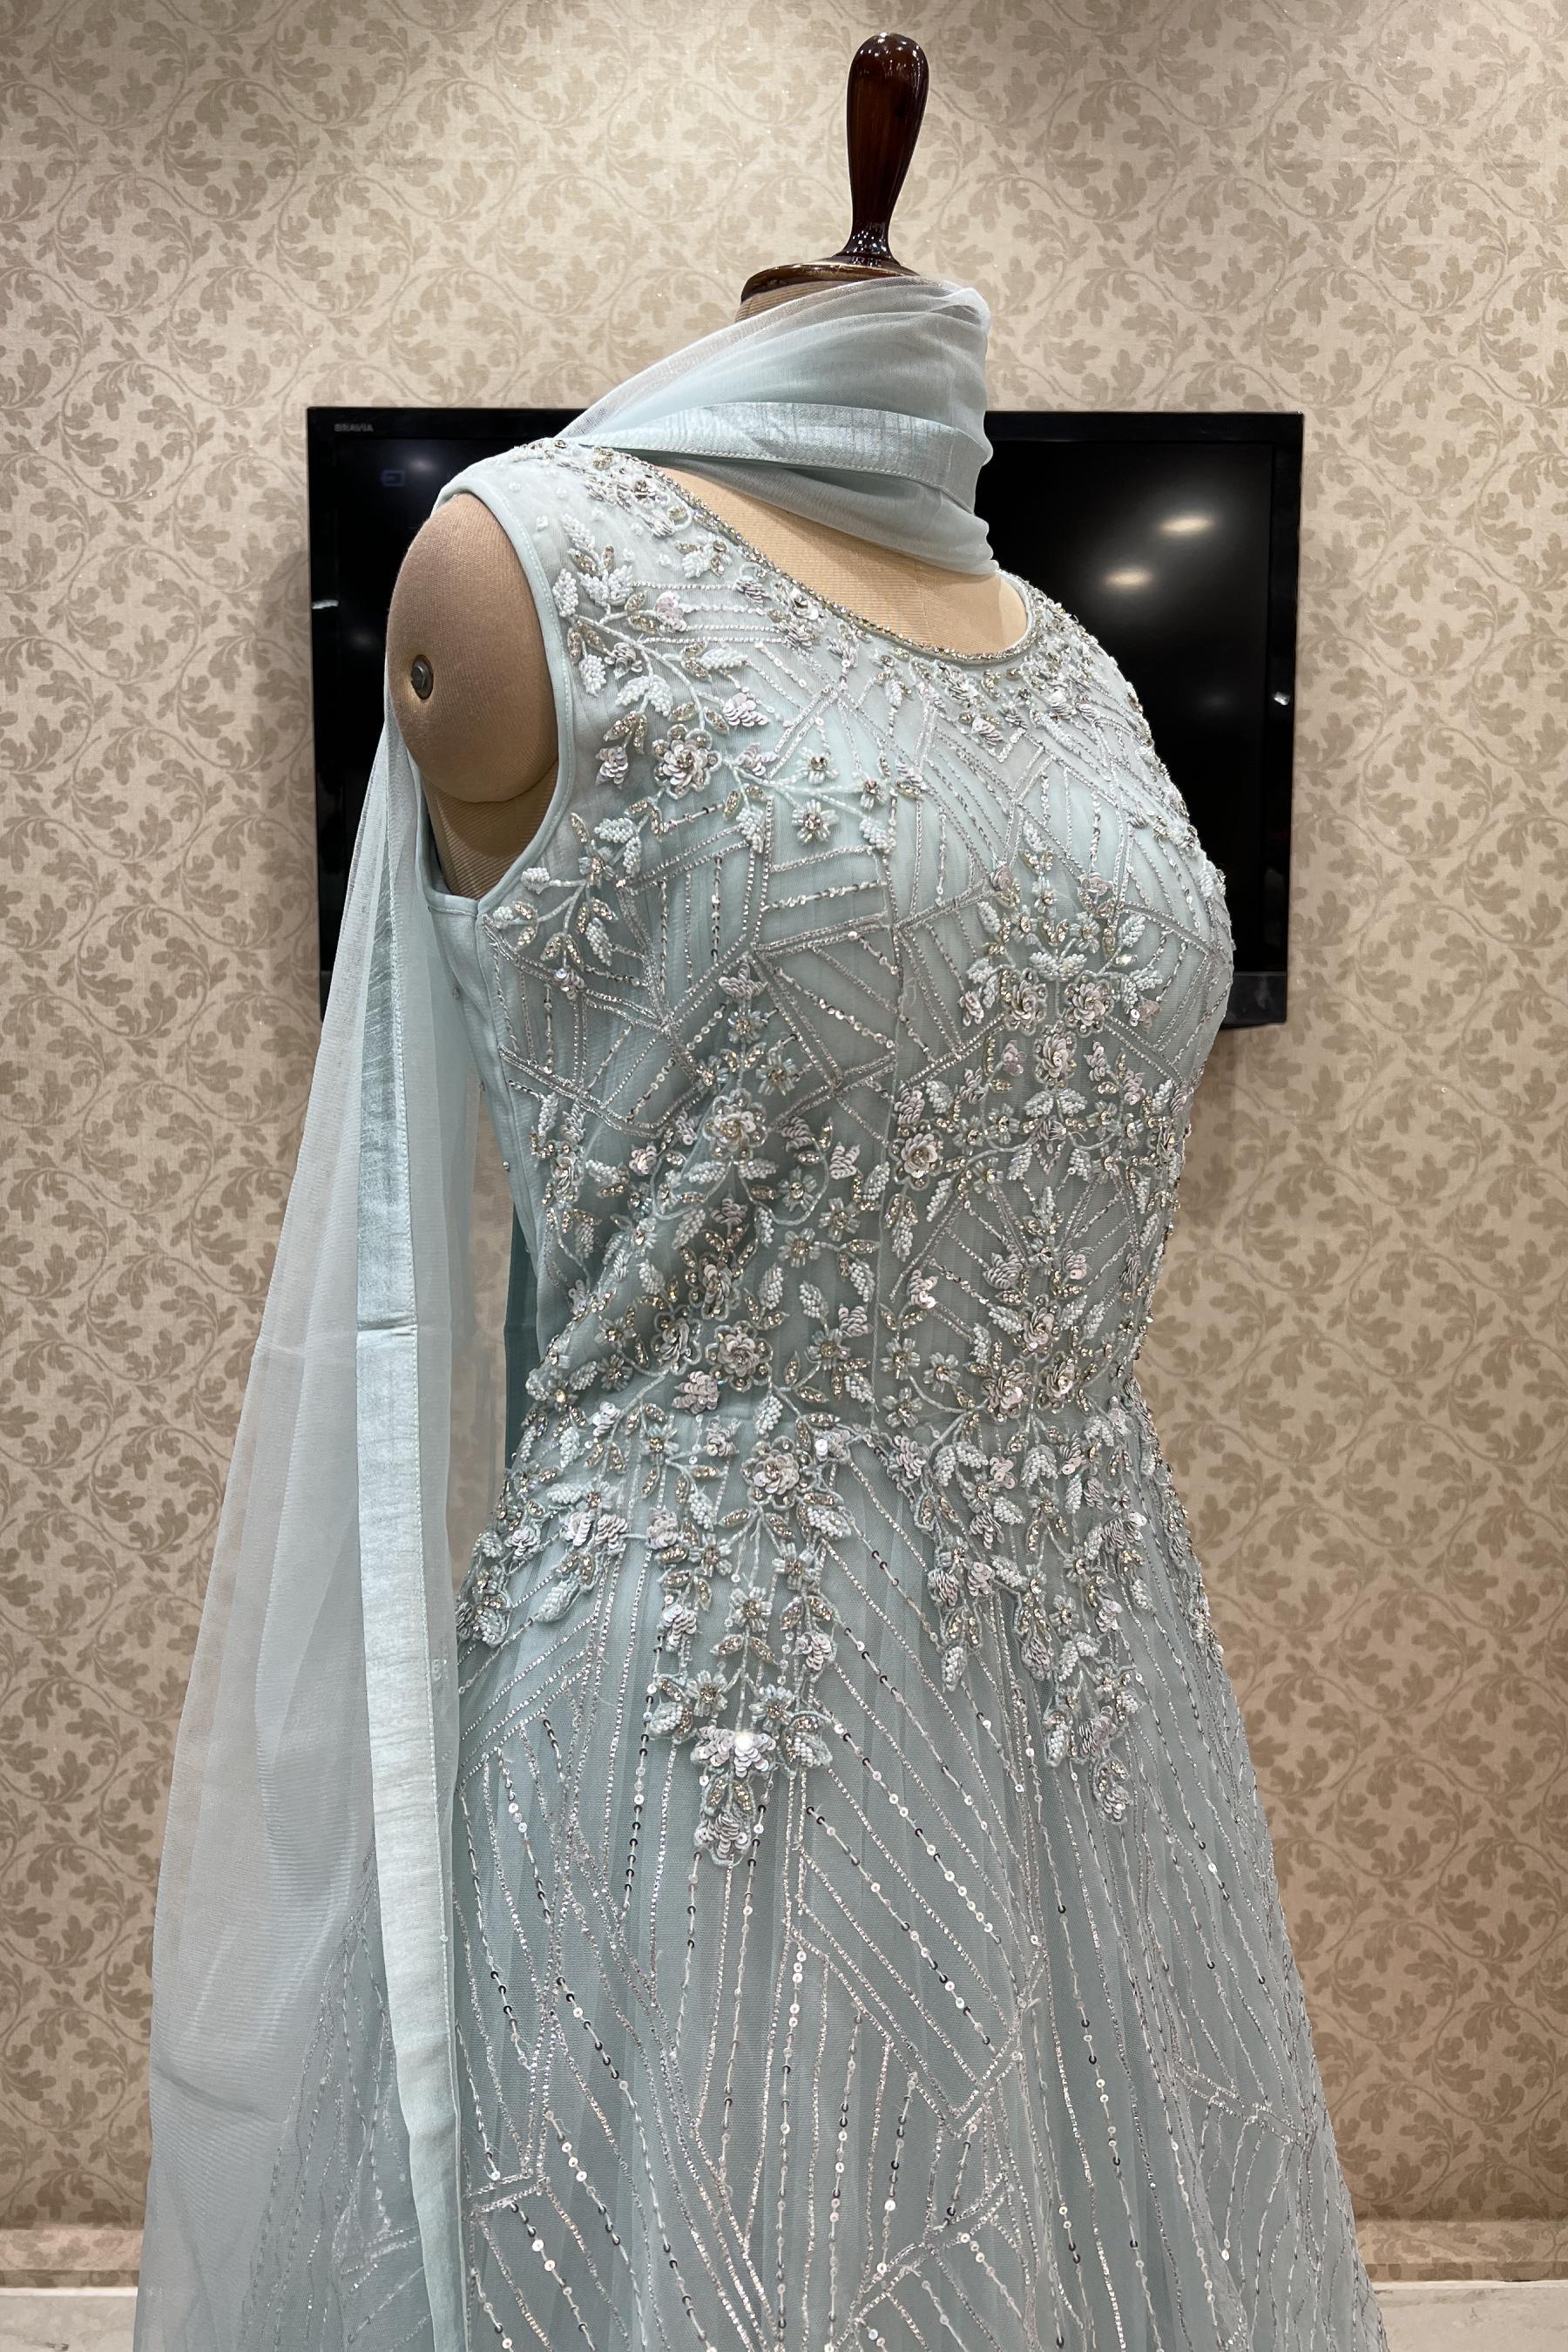 Designer Indian Bridal Wear Silver Lehenga Gown Dress | Indian bridal wear,  Bridal wear, Gowns dresses